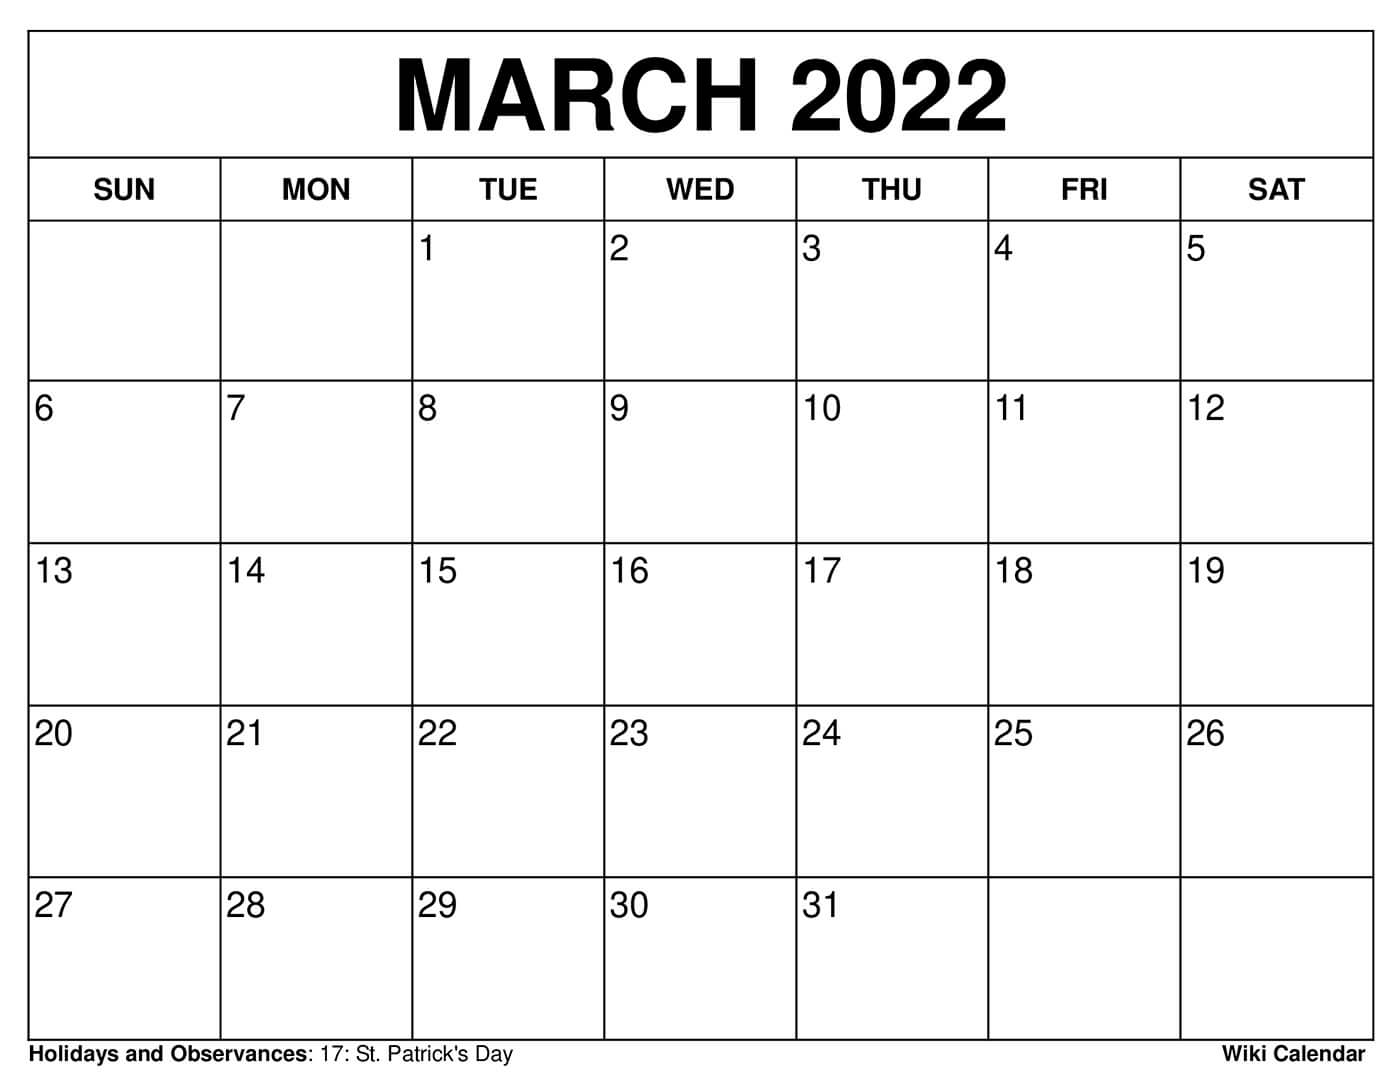 Free Printable March 2022 Calendar Free Printable March 2022 Calendars - Wiki Calendar